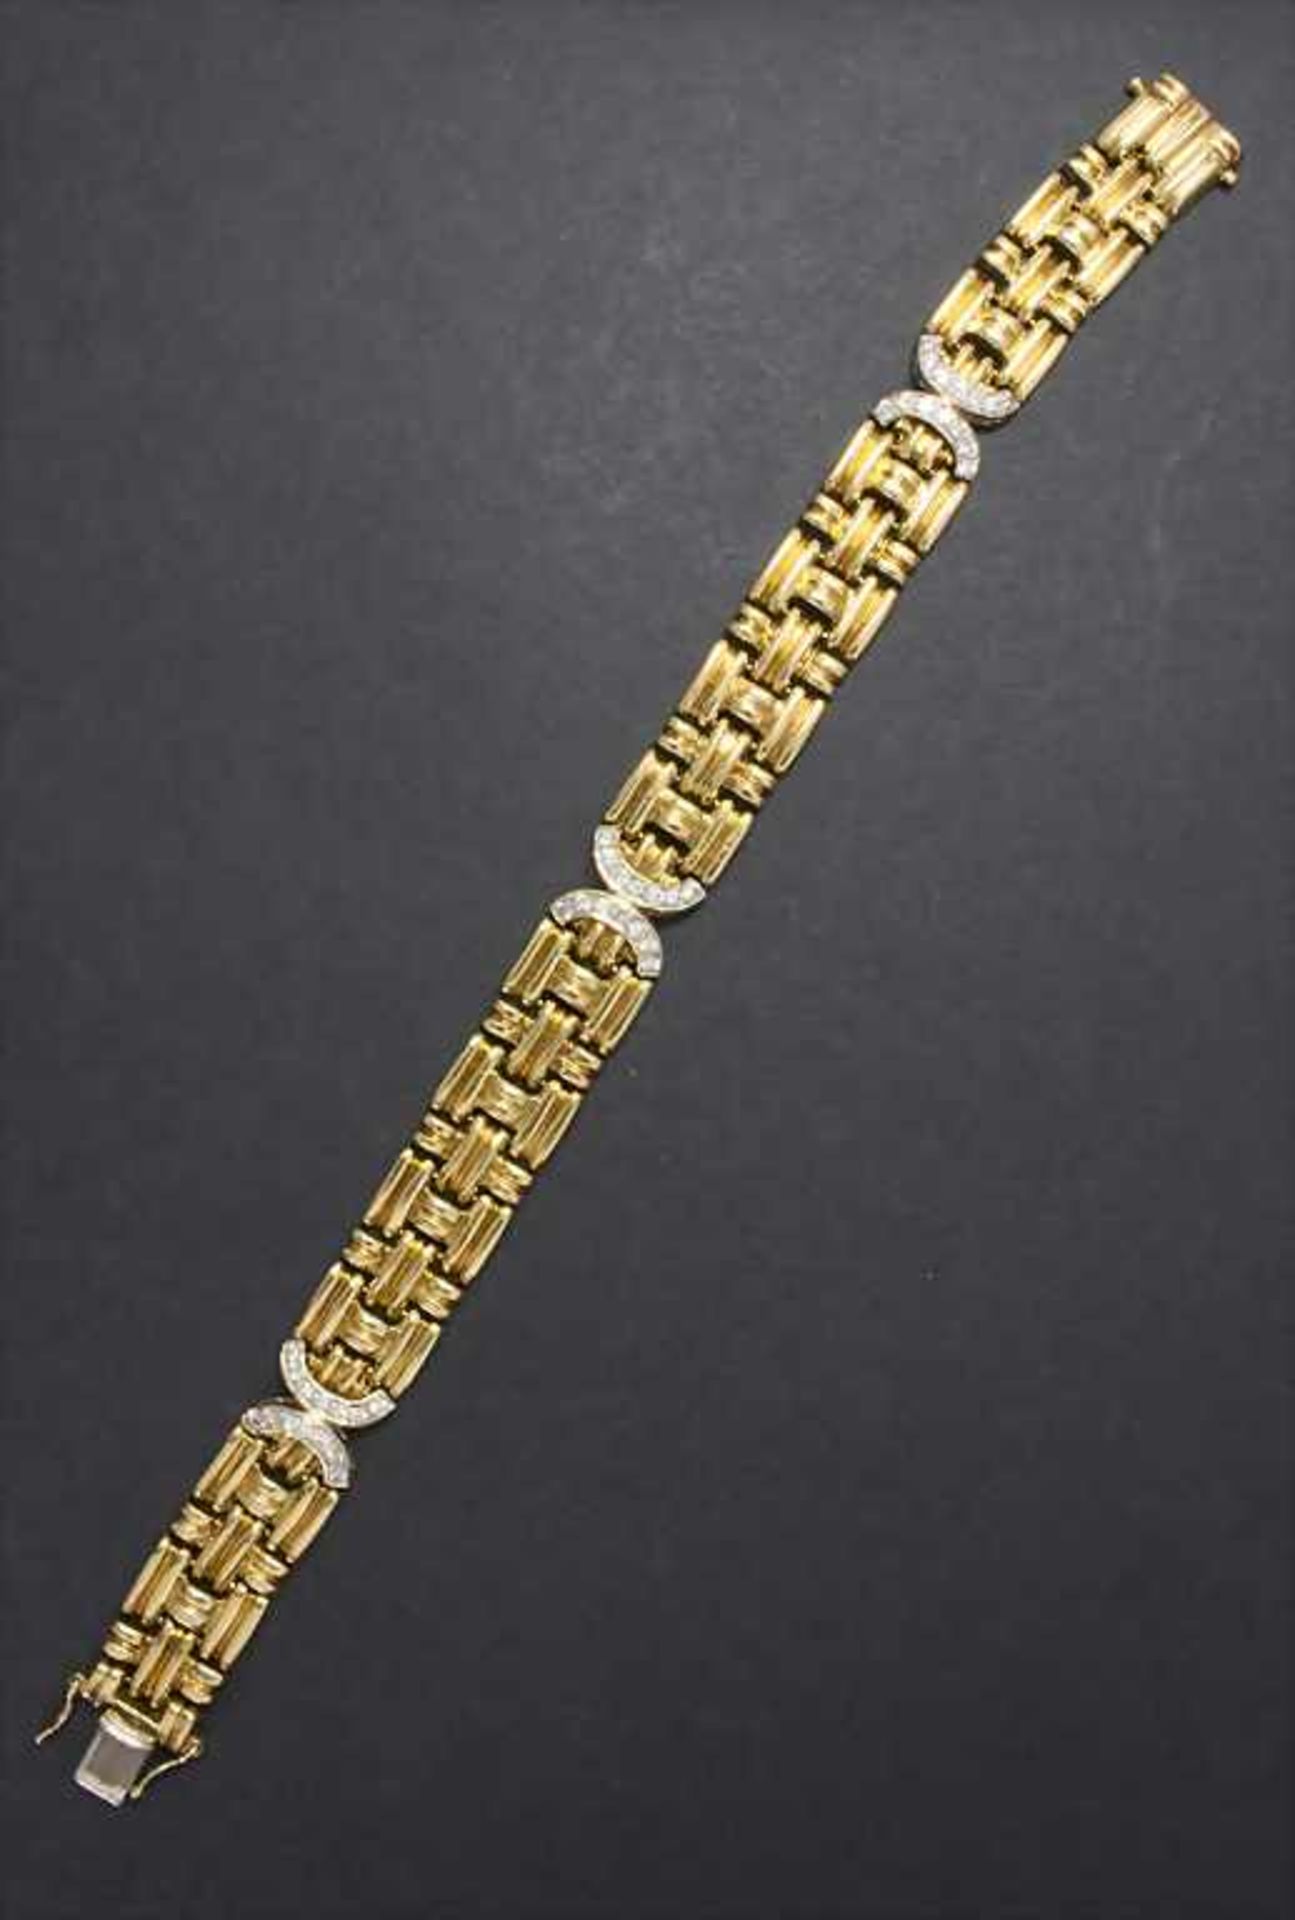 Armband in Gold mit Diamant / A bracelet in gold with diamond - Bild 4 aus 4